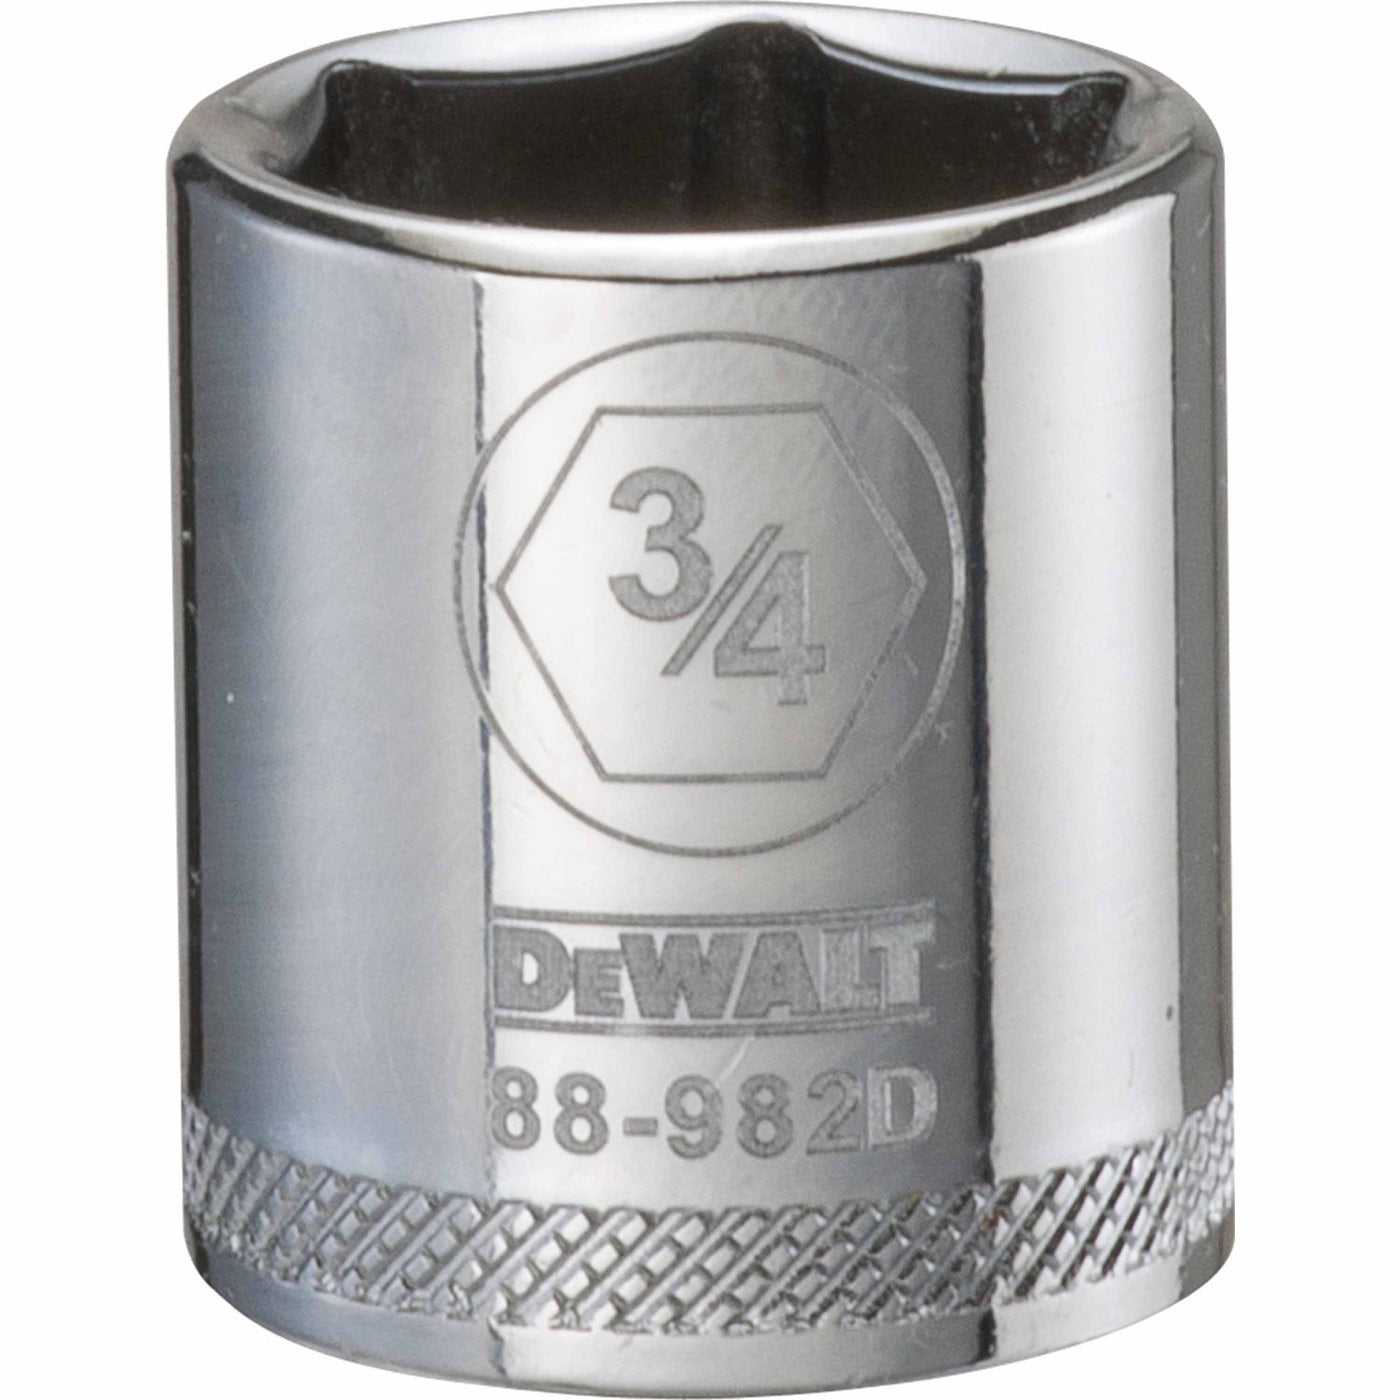 Dewalt, DeWalt DWMT88982OSP Mechanics 6 Point 3/8" Drive Socket 3/4"